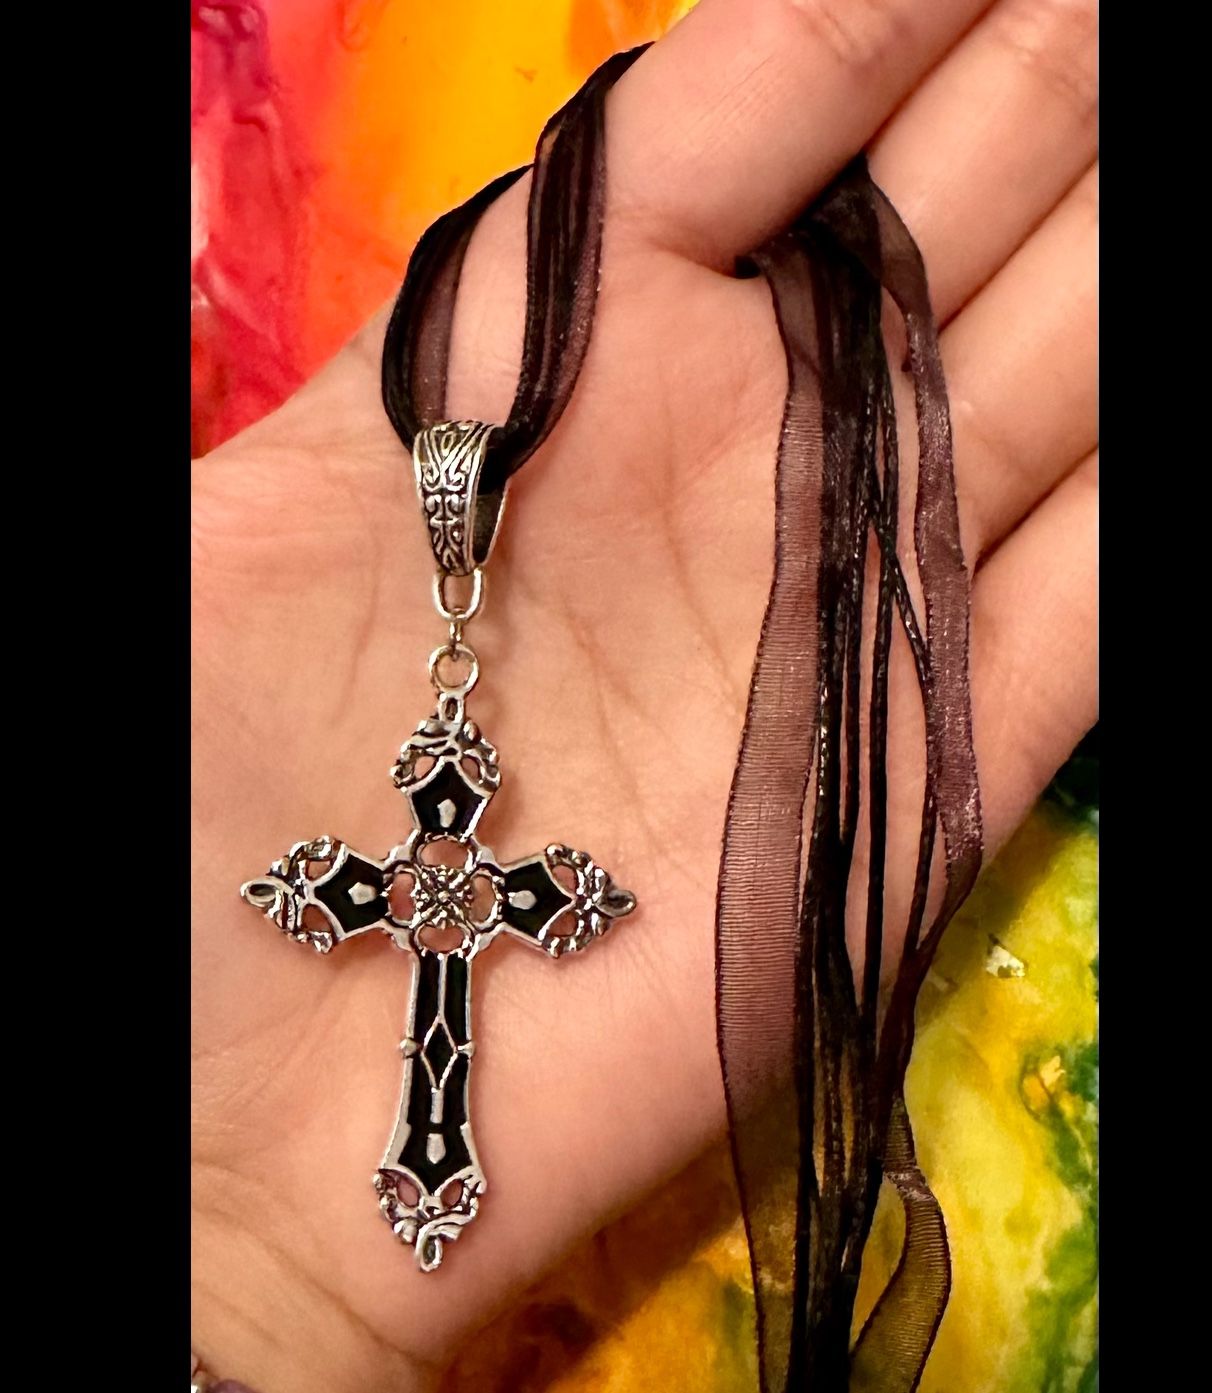 Gothic Dark Silver Cross Vampire Necklace Chain Jewelry Halloween Unisex New